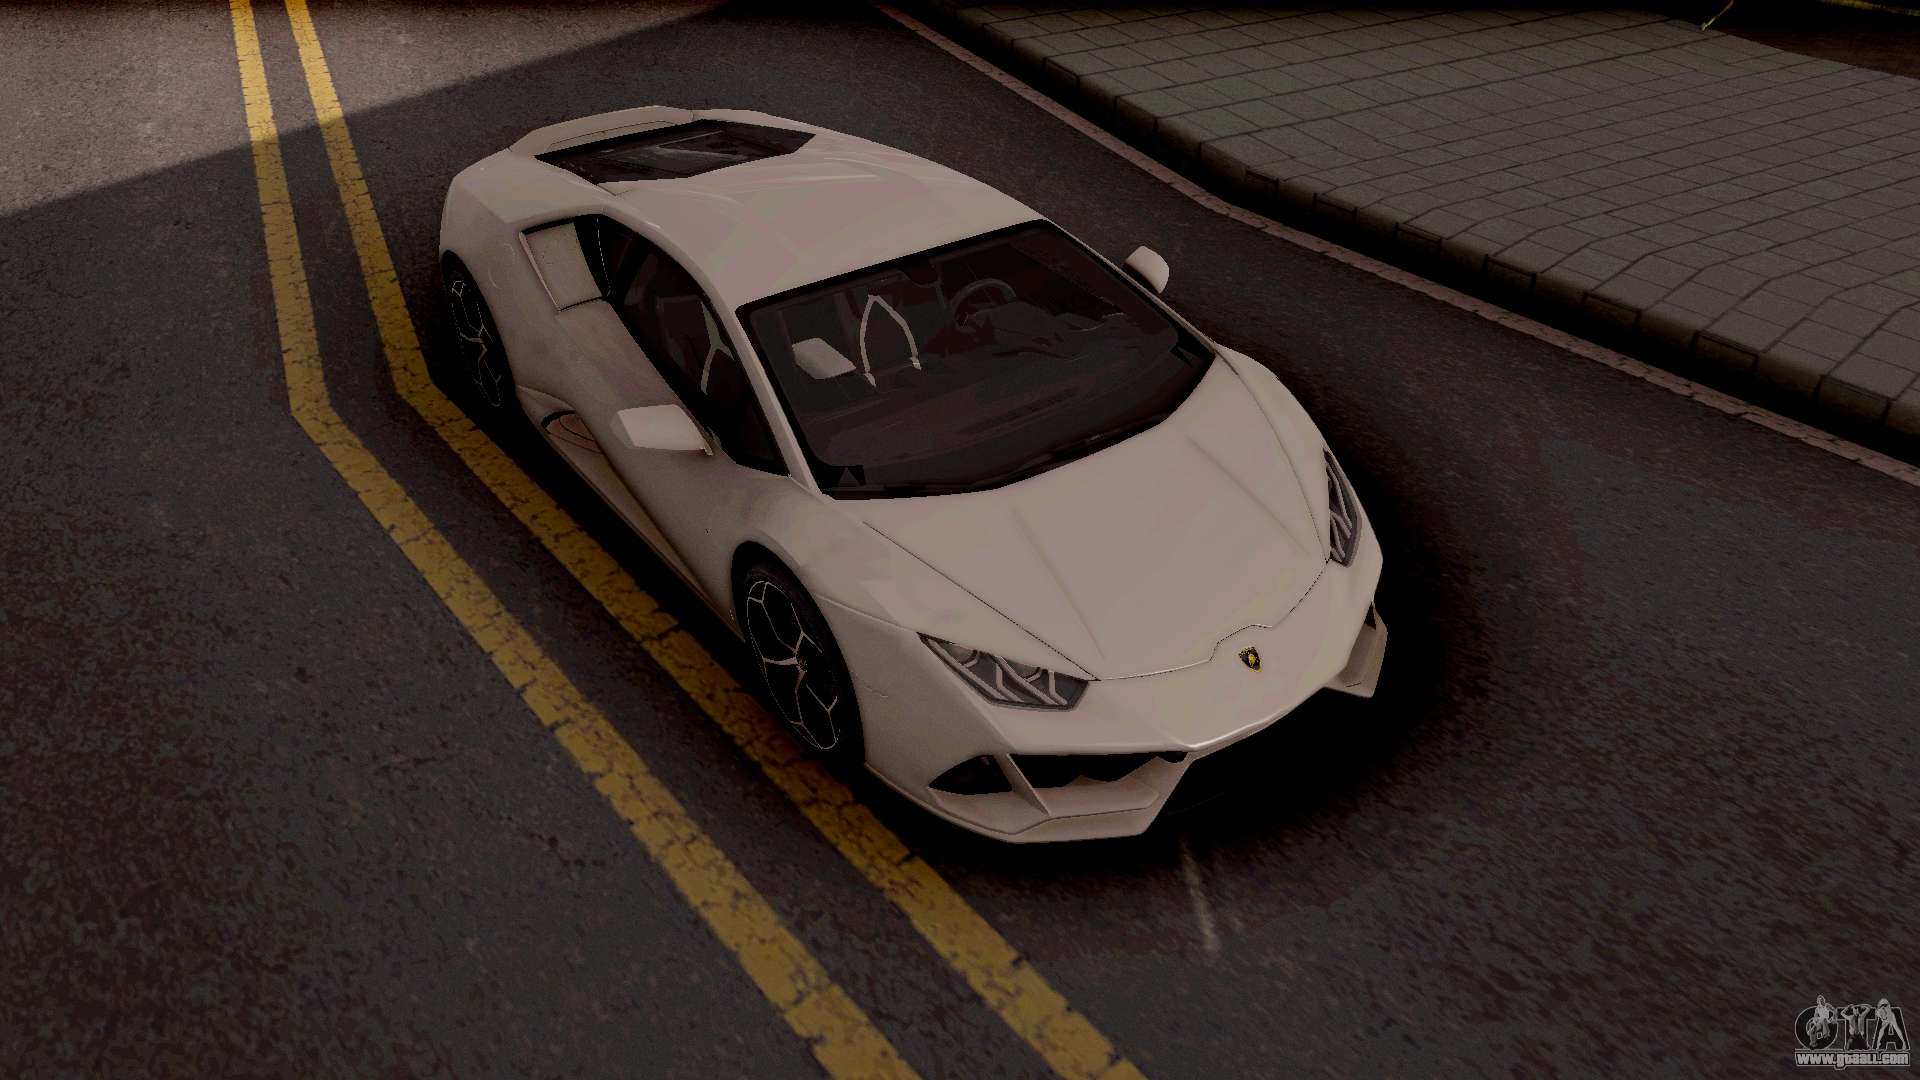 Lamborghini Huracan EVO Coupe for GTA San Andreas